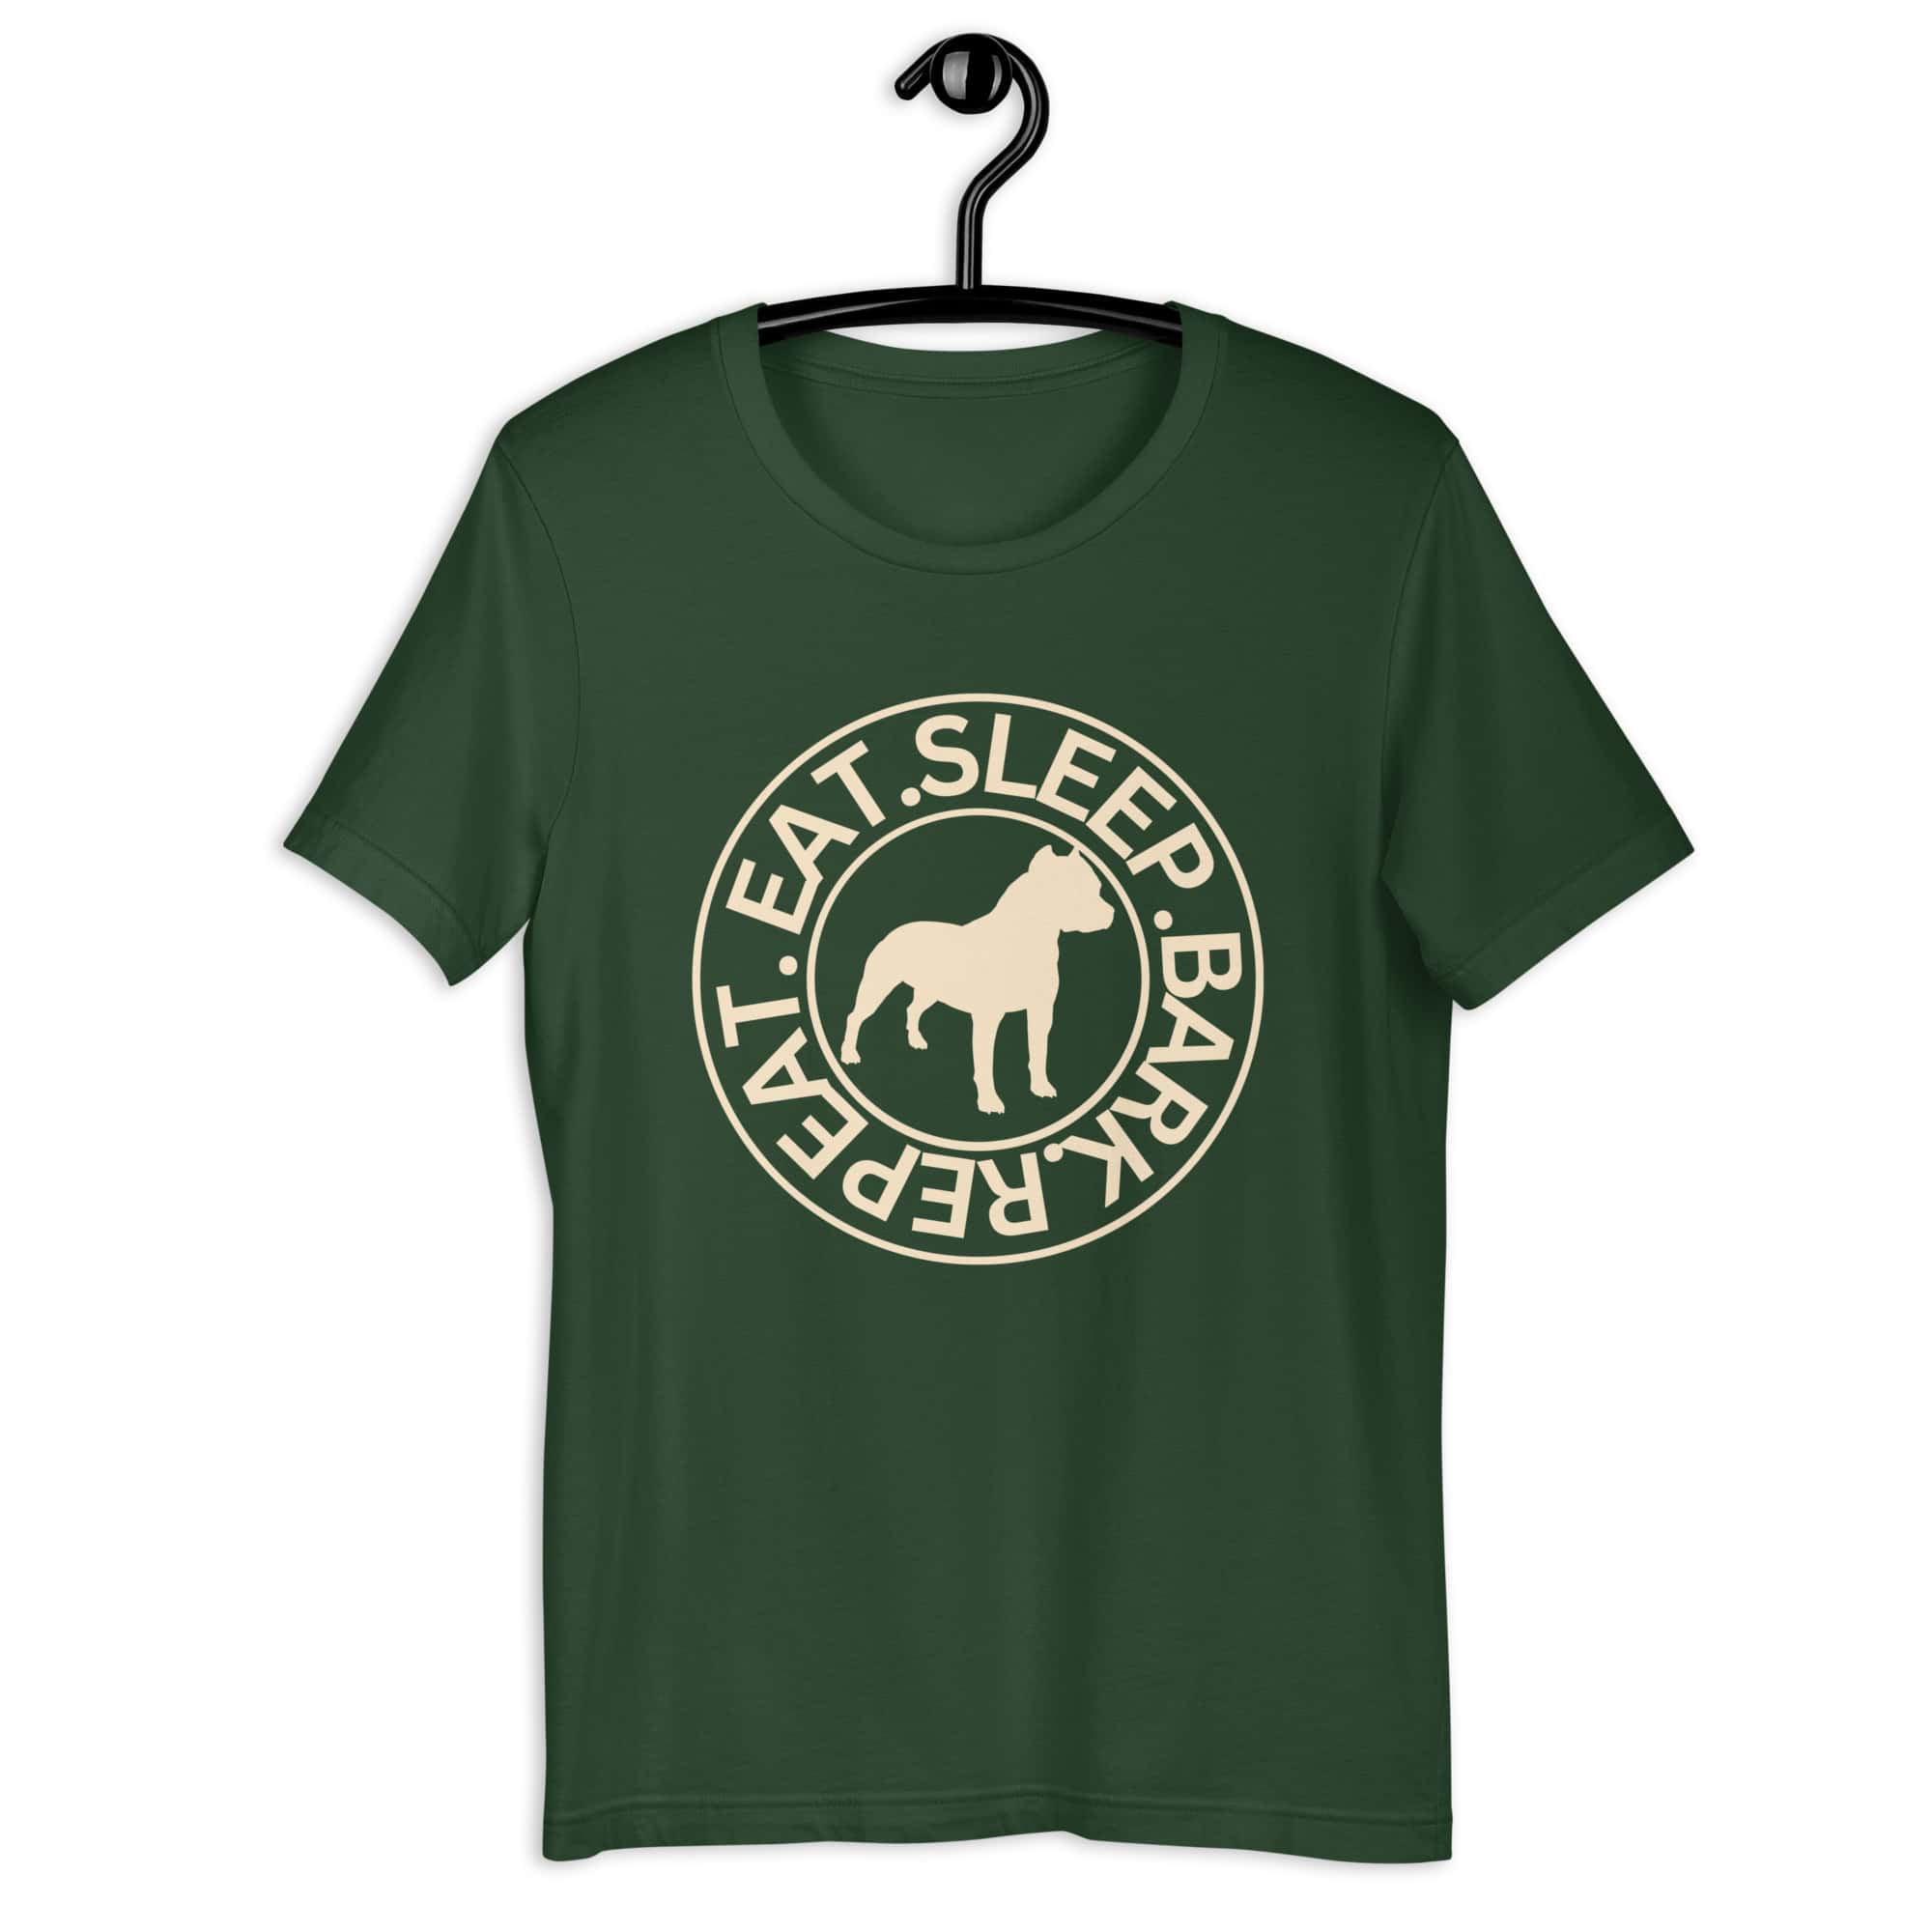 Eat Sleep Bark Repeat Toy Bulldog Unisex T-Shirt. Forest